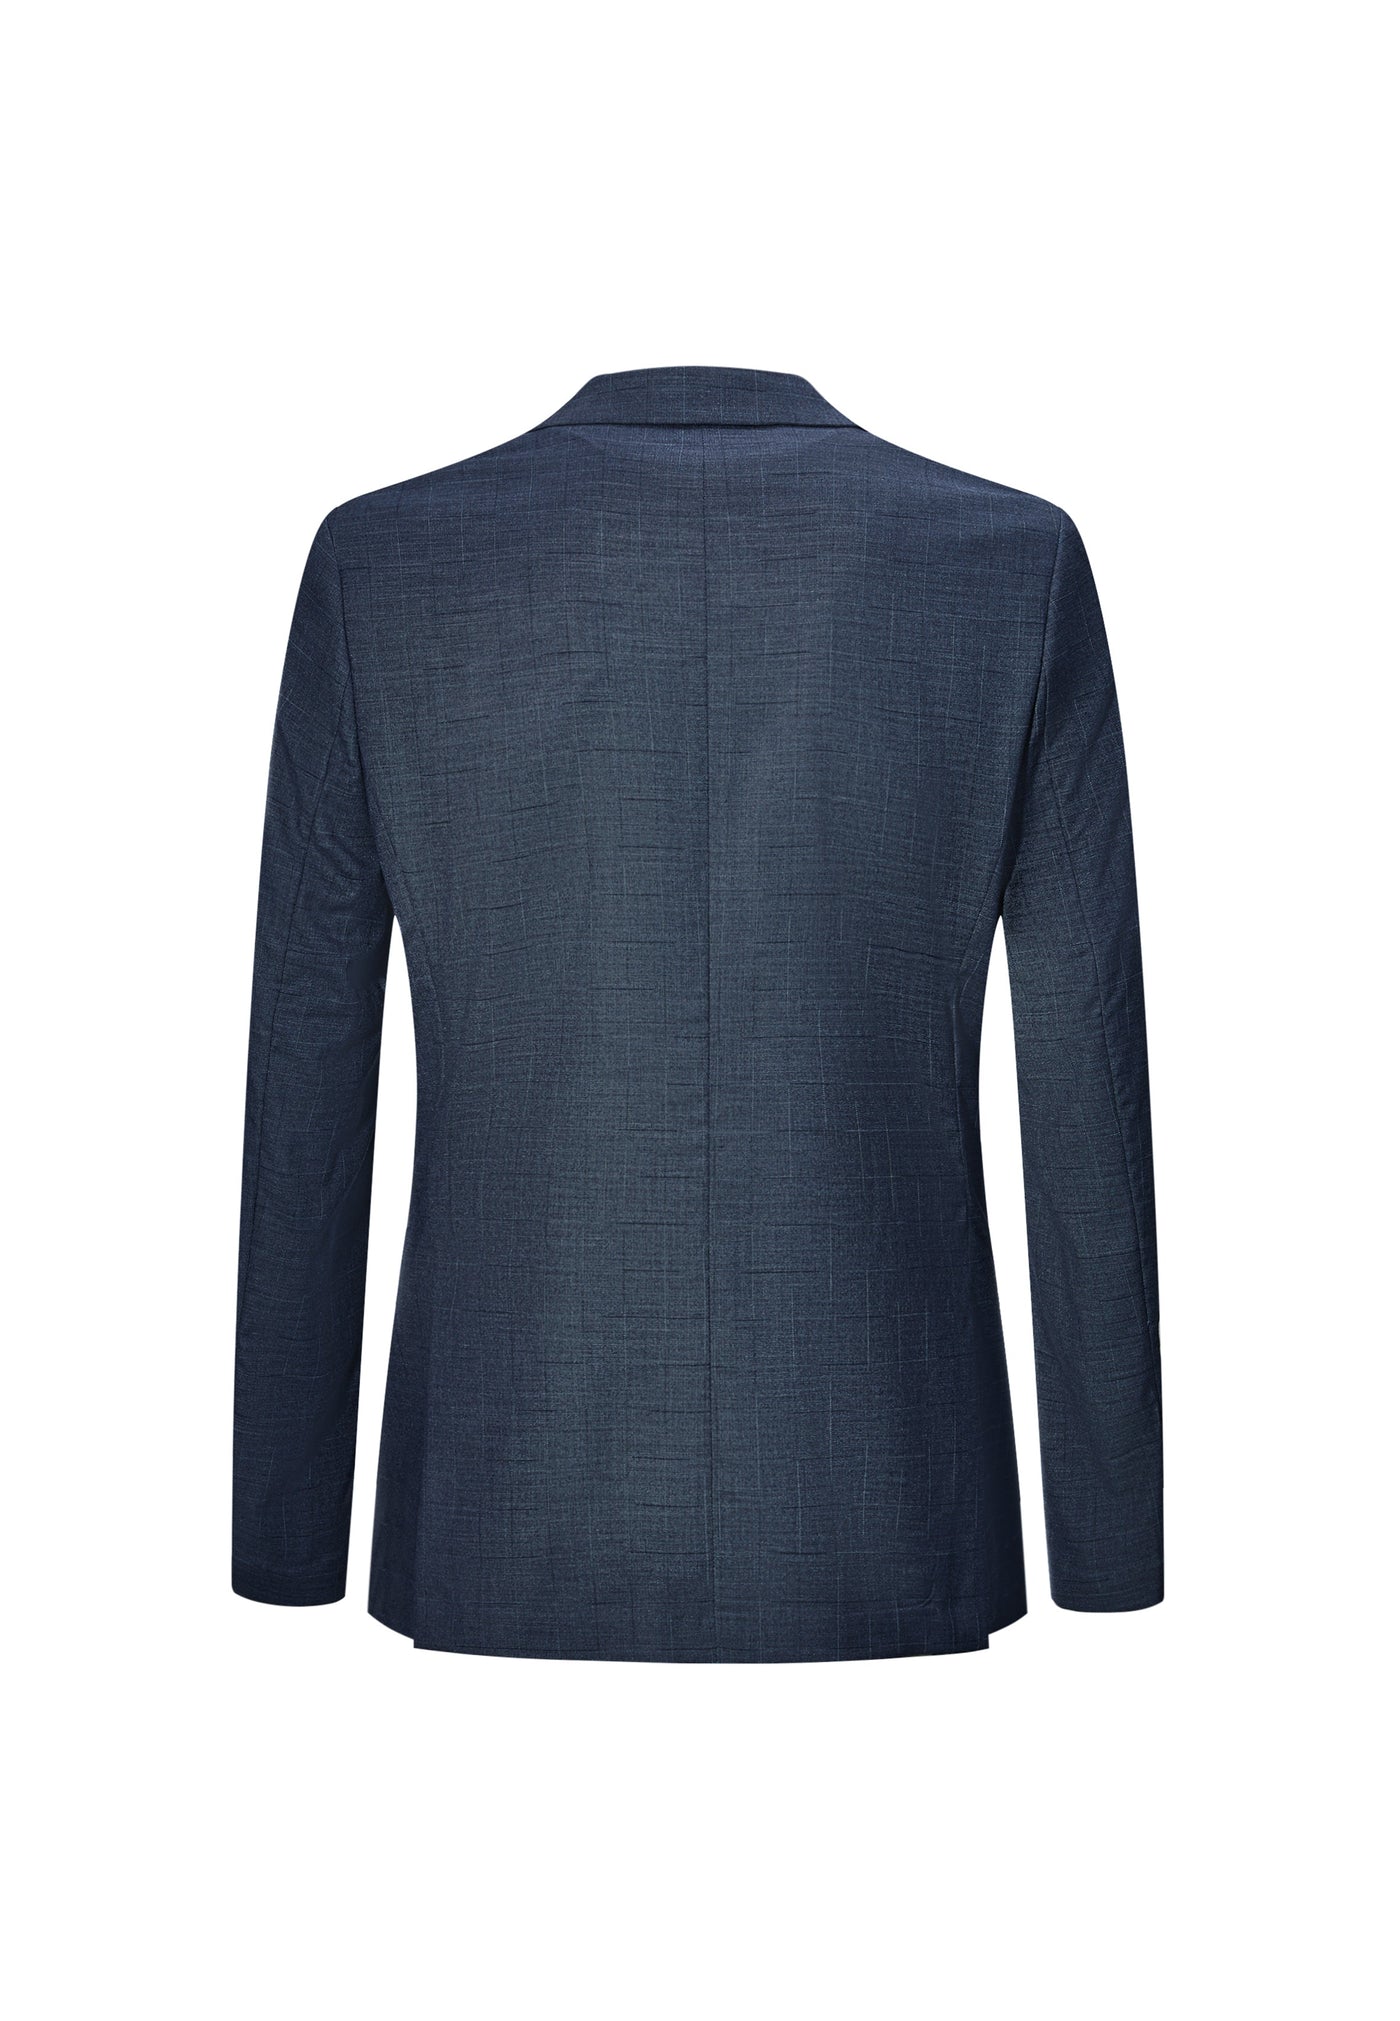 Men Clothing 3M Check Multi-Way Stretch Suit Blazer Slim Fit